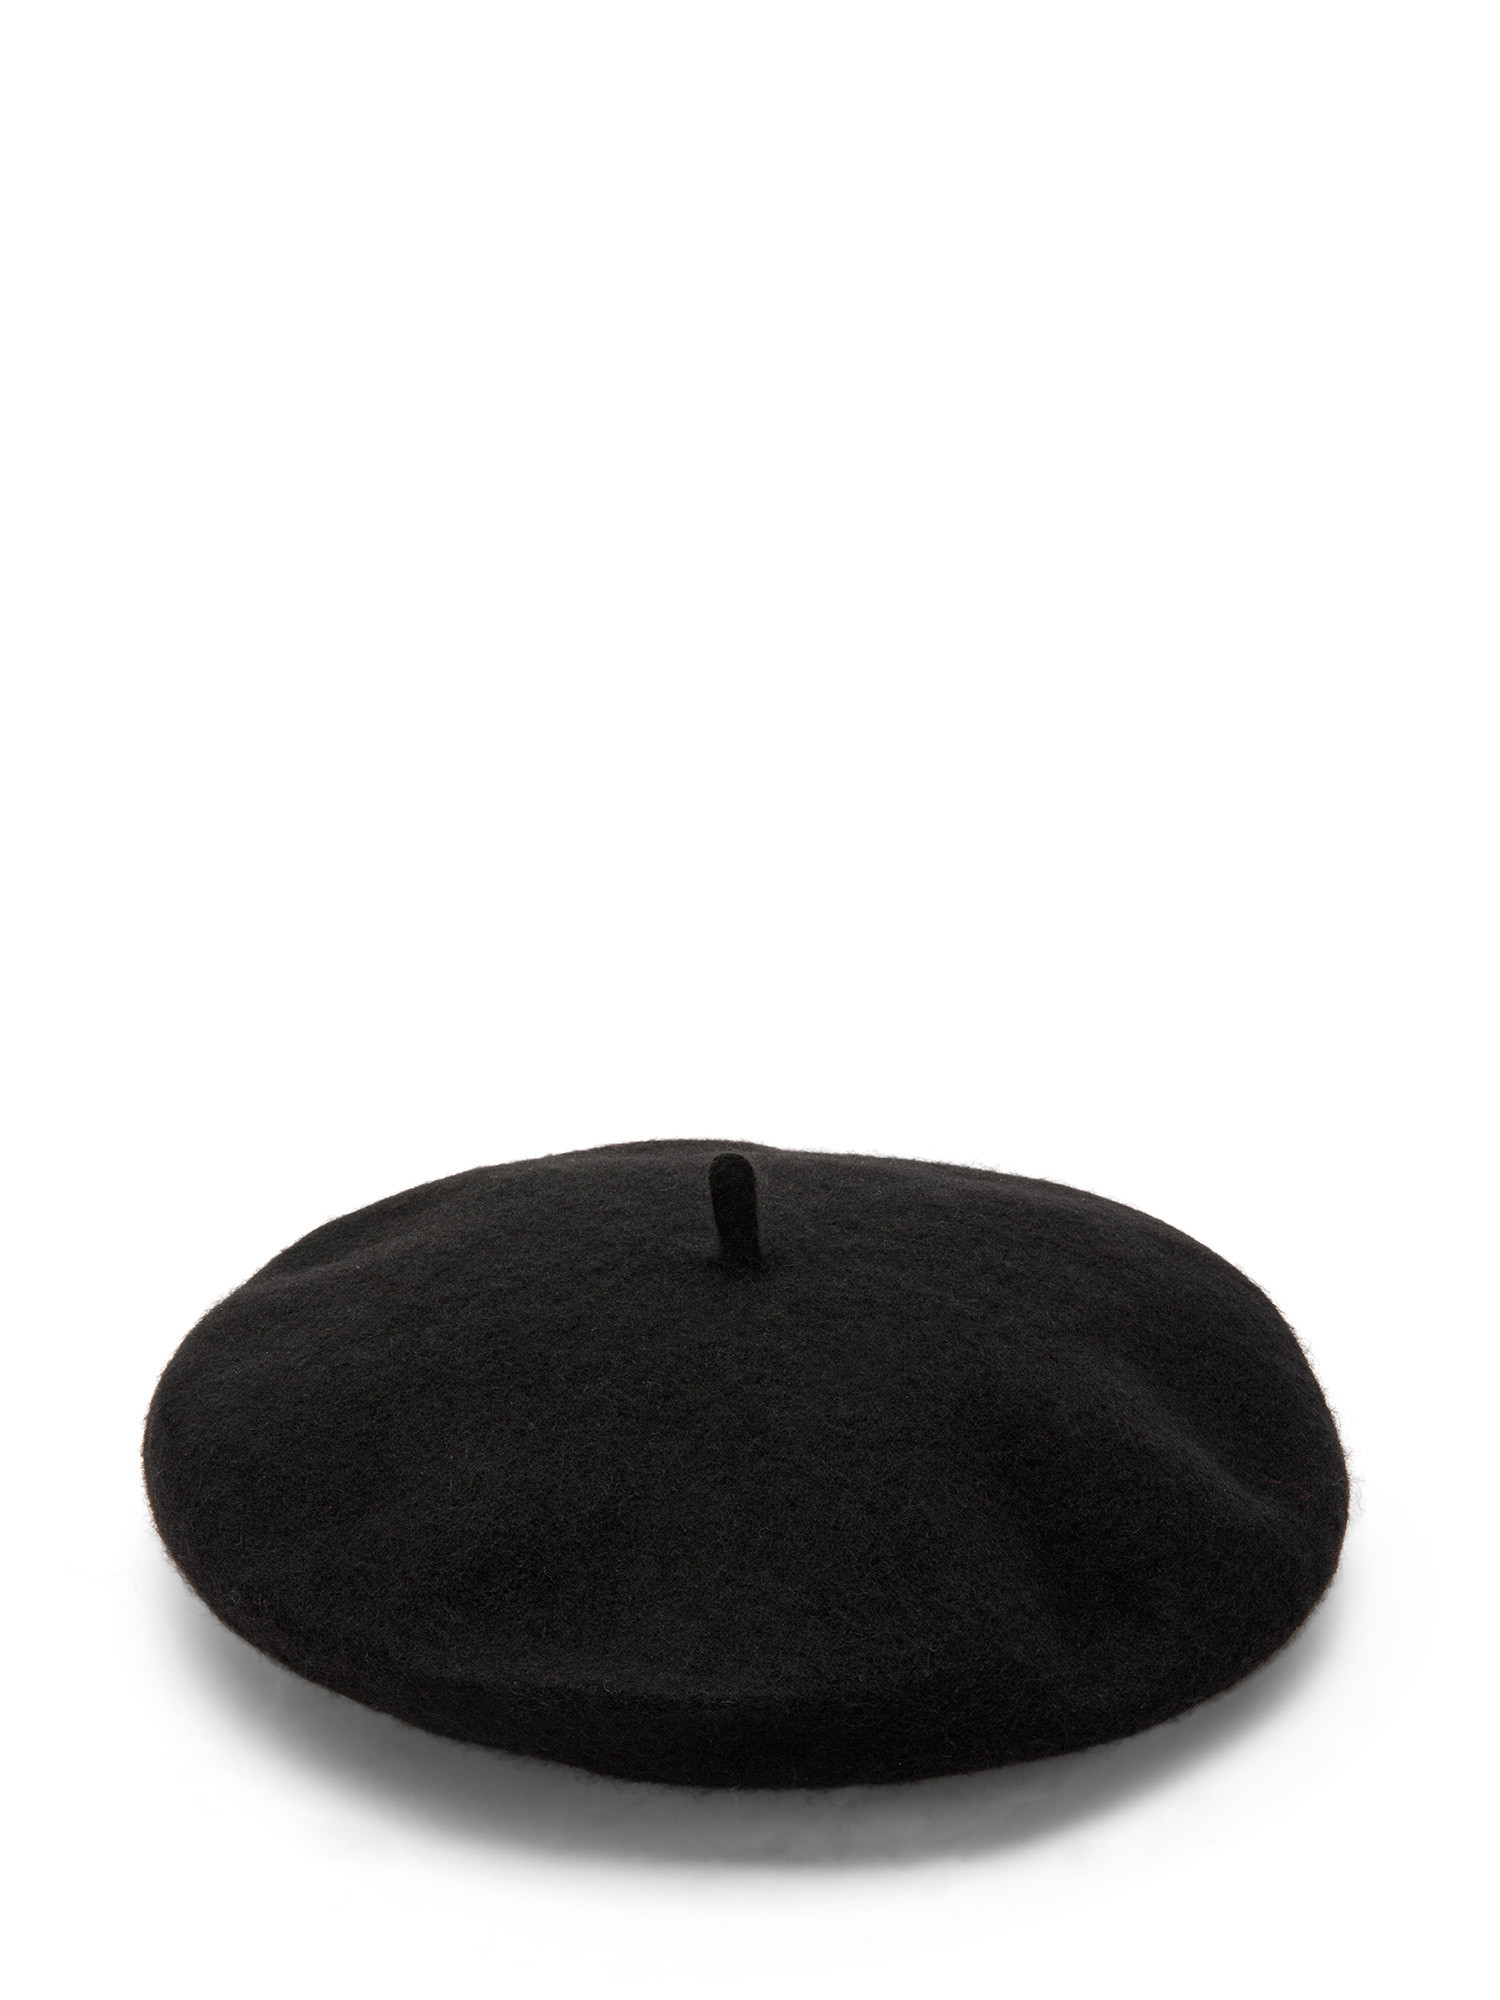 Koan - Pure wool beret, Black, large image number 0